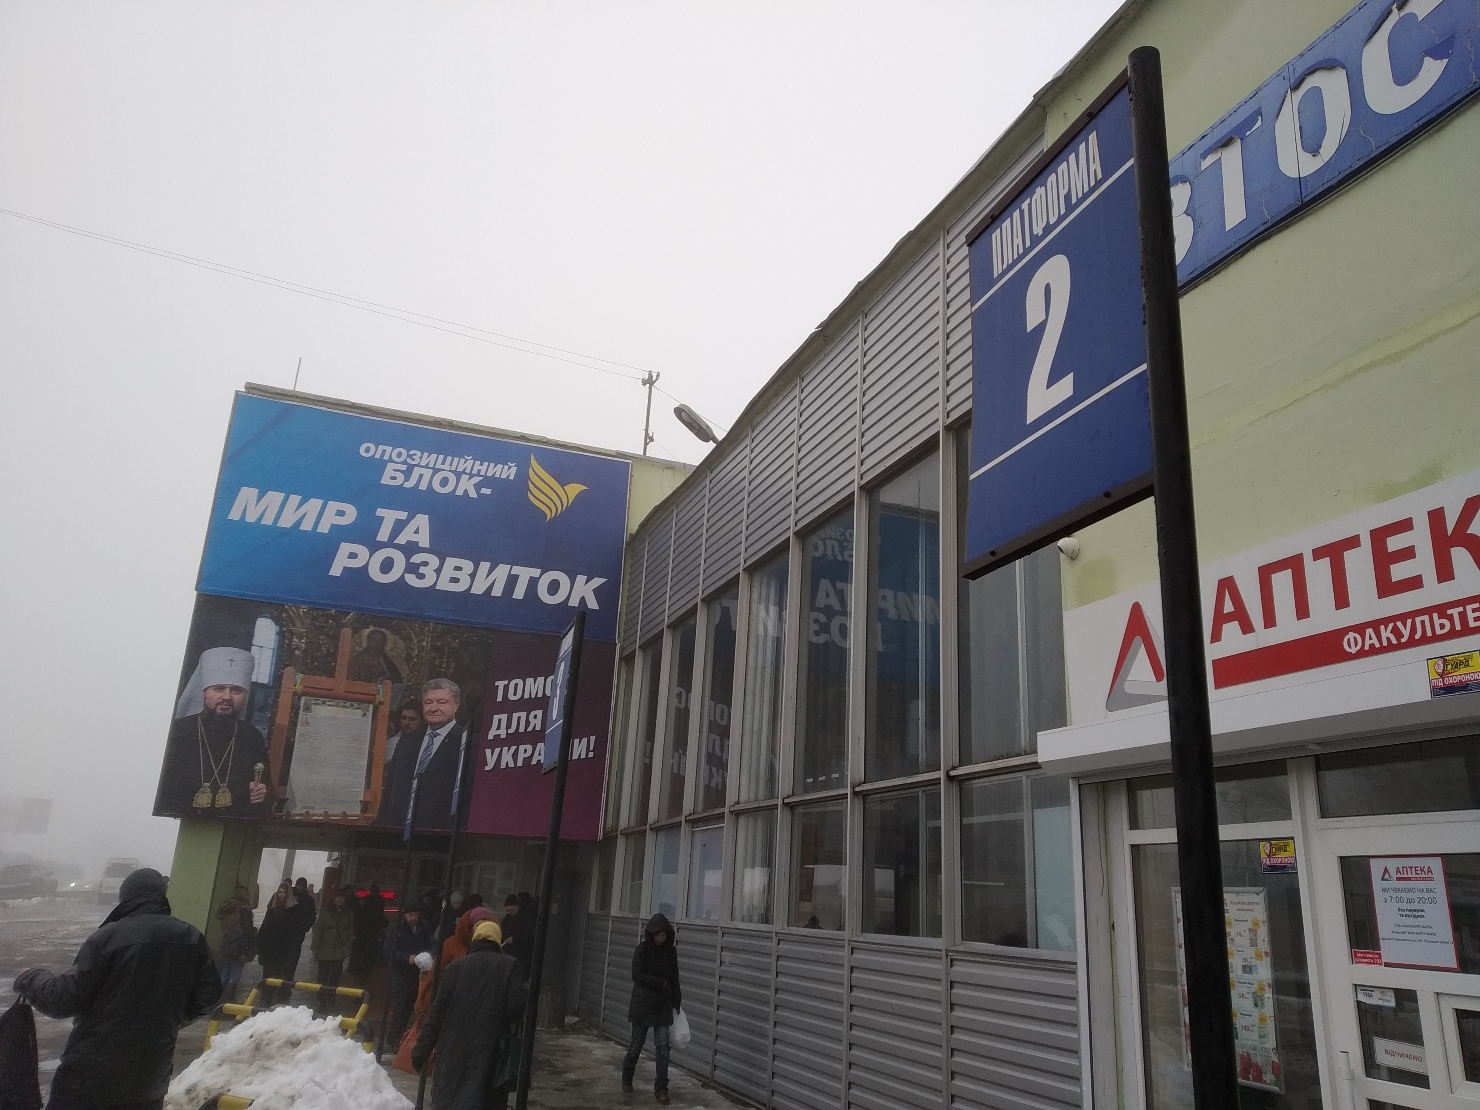 news Dnipro 28 01 18 Novomosk